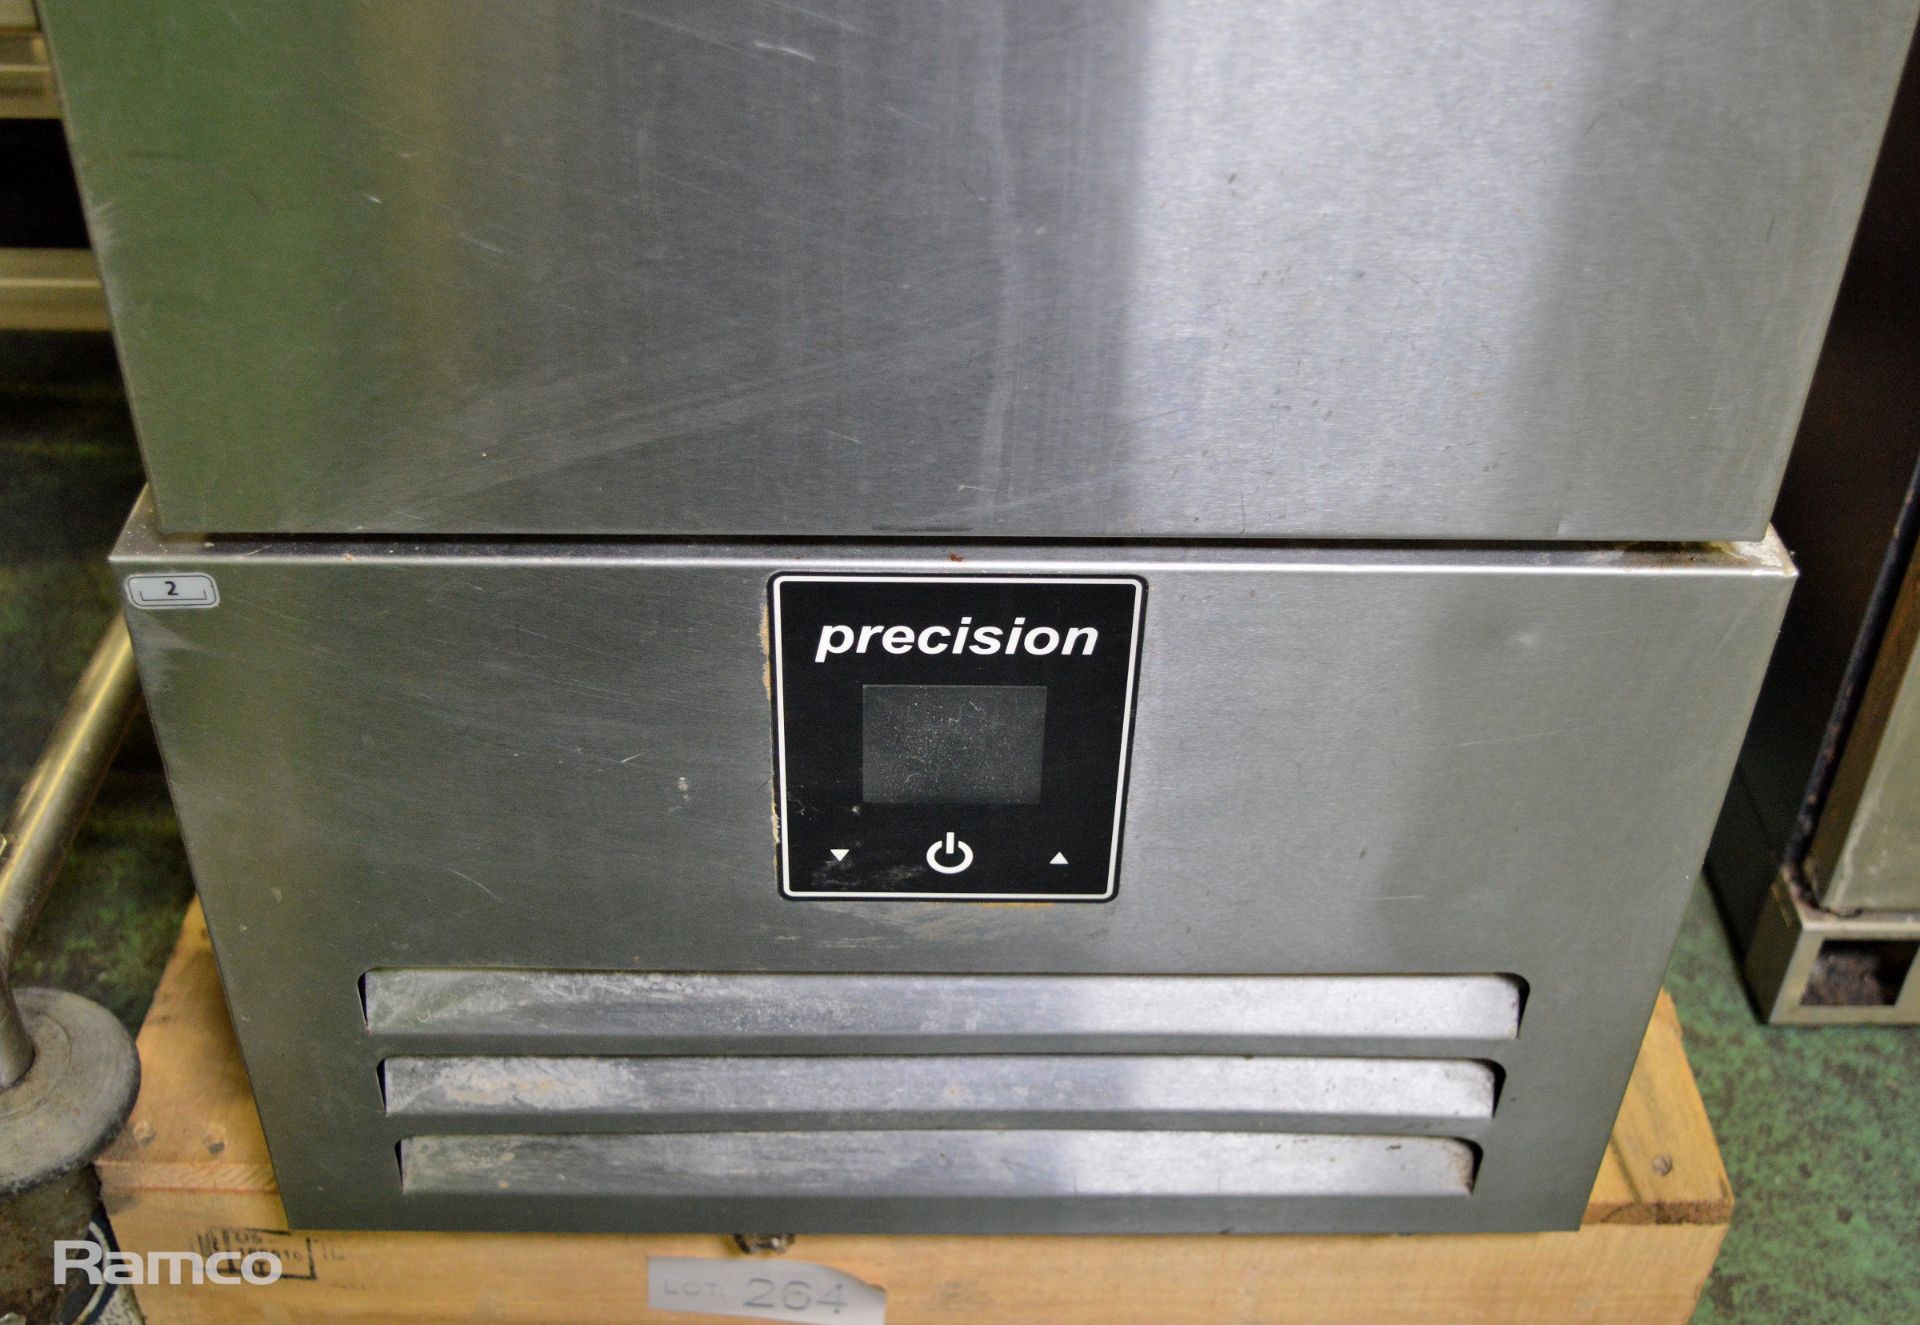 Precision LSS 150 undercounter freezer - L450 x W750 x H850mm - Image 4 of 4